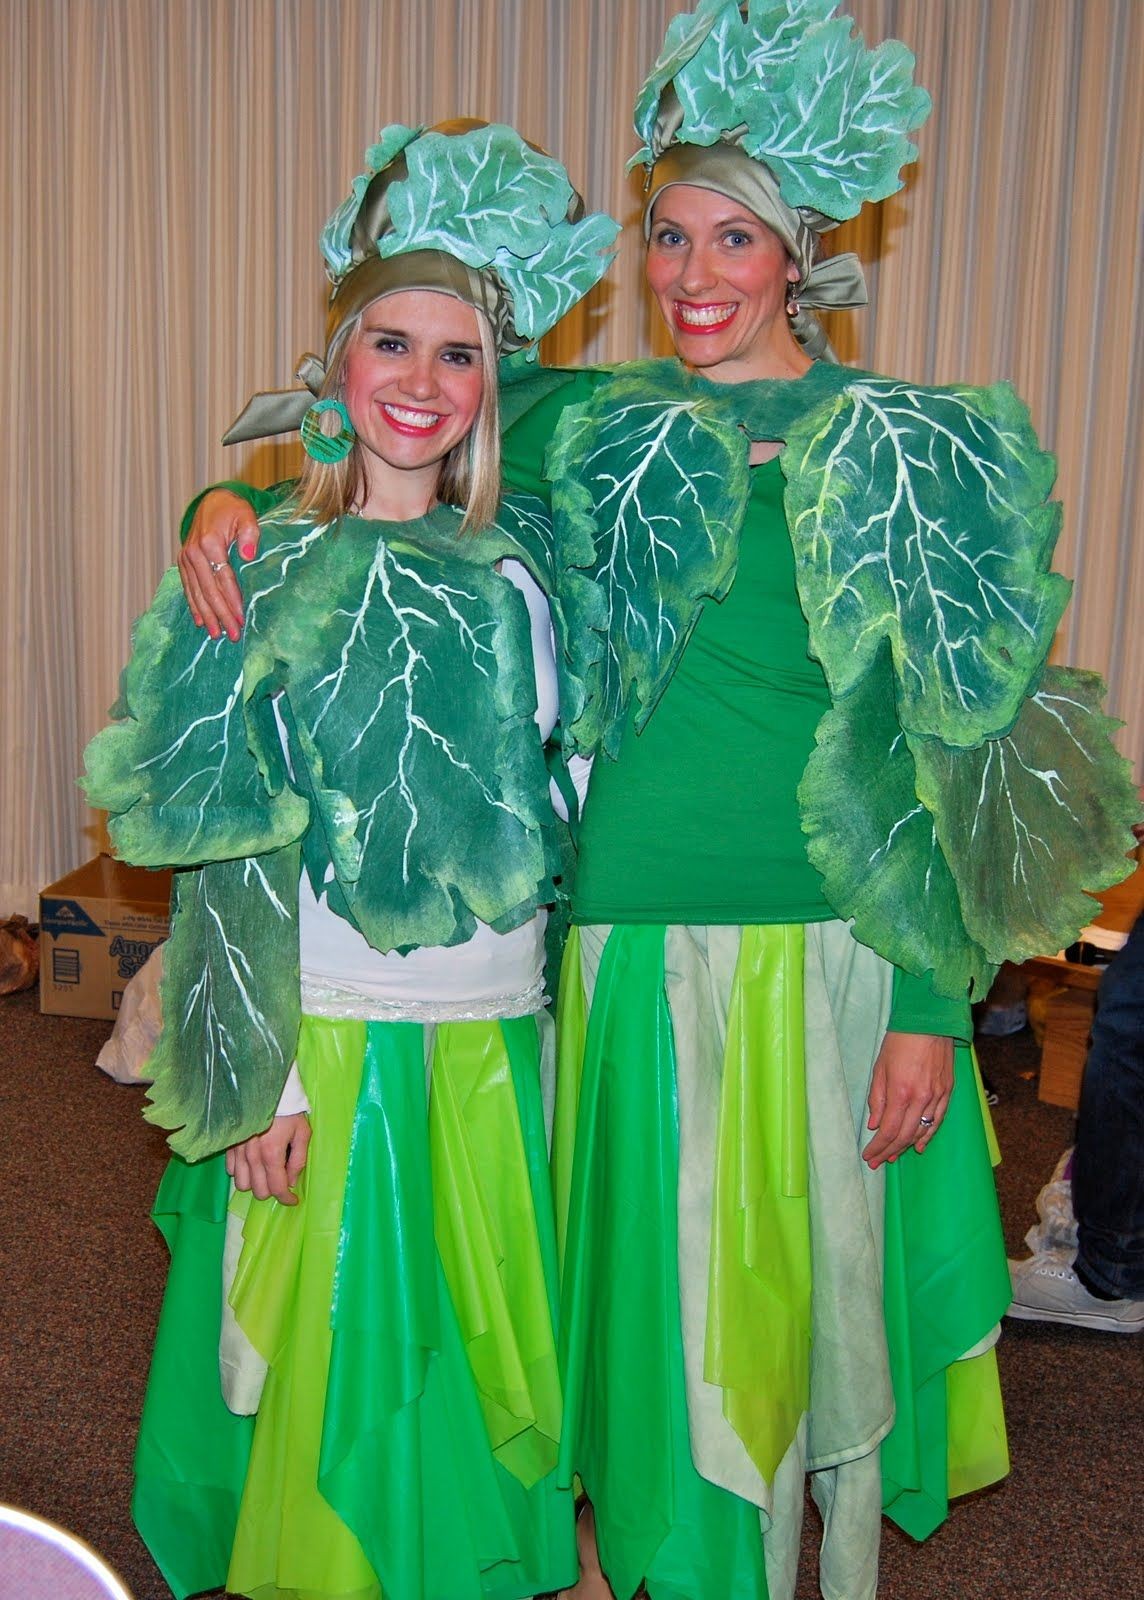 Cool Lettuce Headpieces Capital City Caper Costumes Pinterest Cabbage Costume